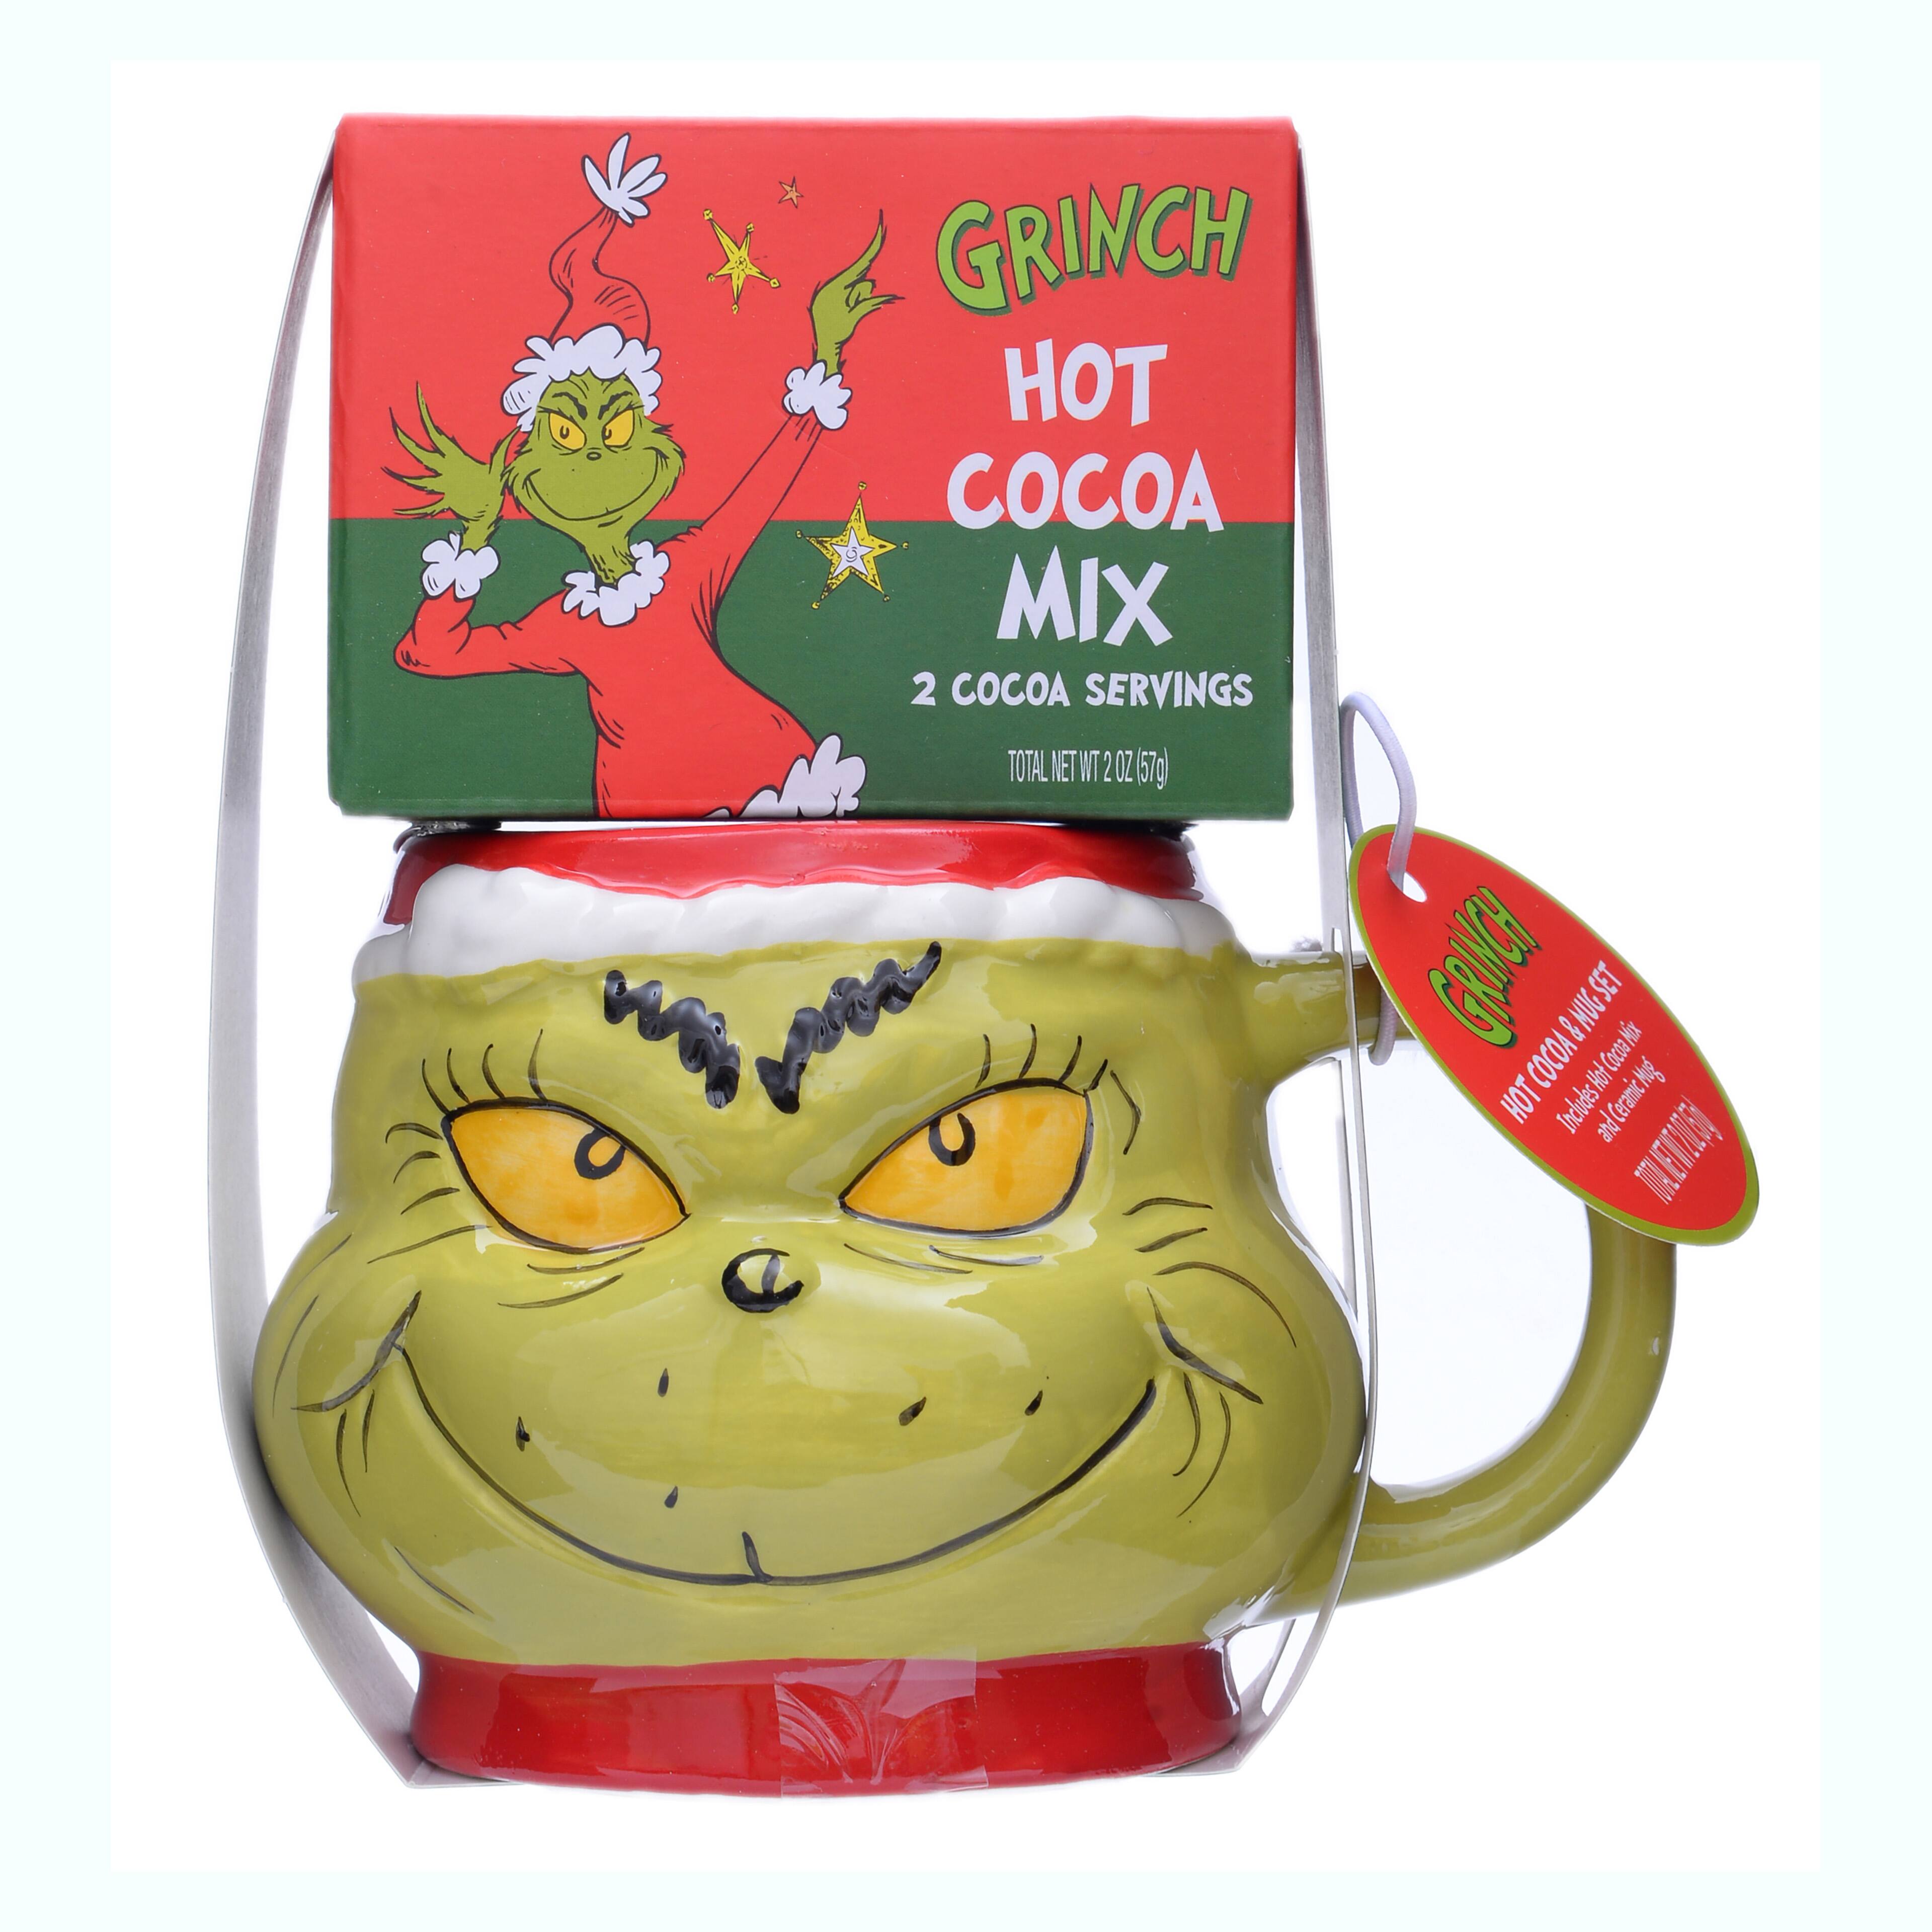 Purchase Wholesale elf mug. Free Returns & Net 60 Terms on